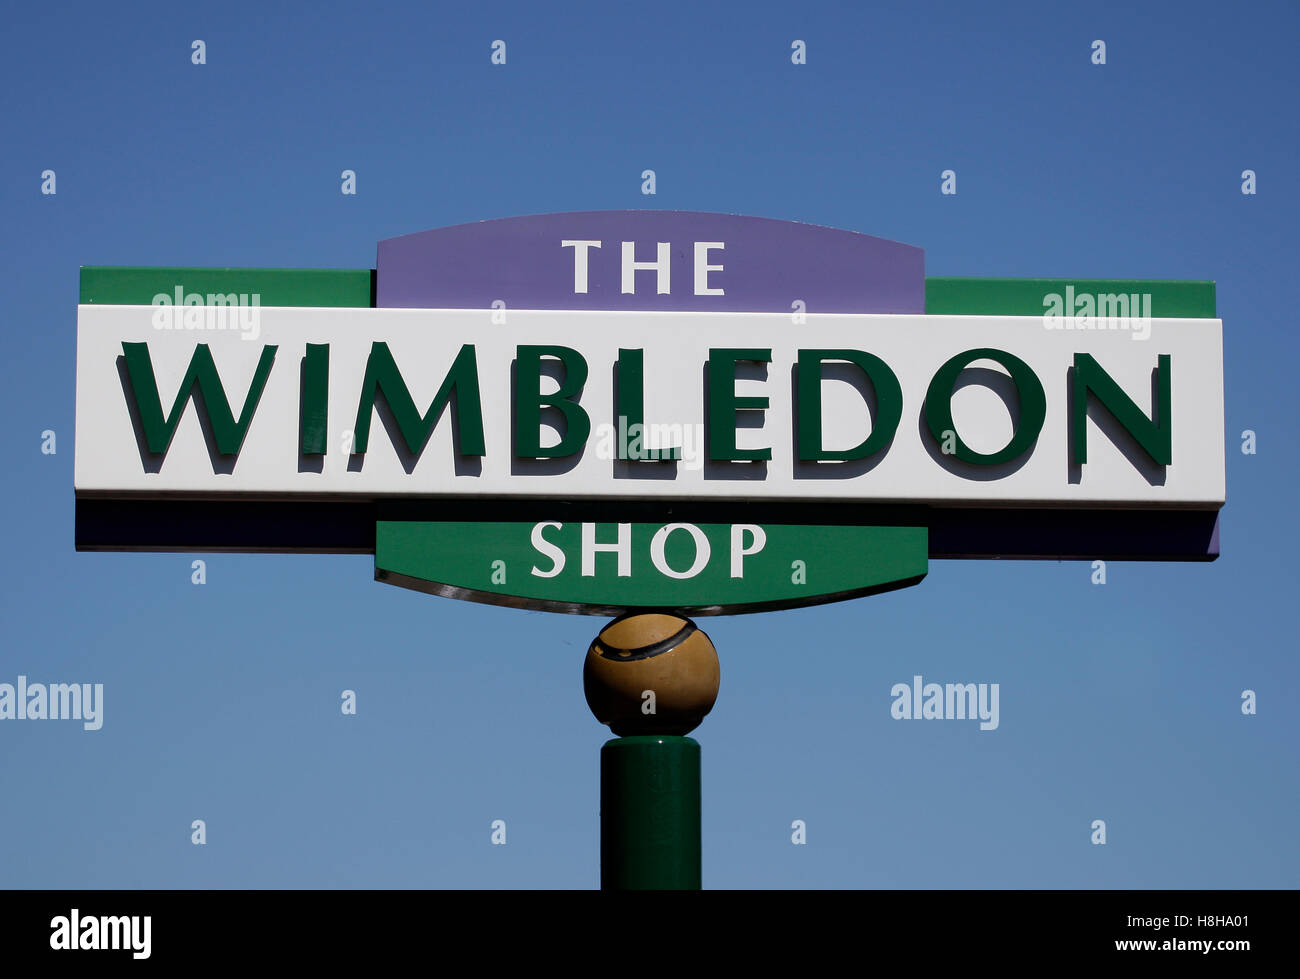 The Wimbledon Shop, Tennis, ITF Grand Slam tournament, Wimbledon 2009, Britain, Europe Stock Photo